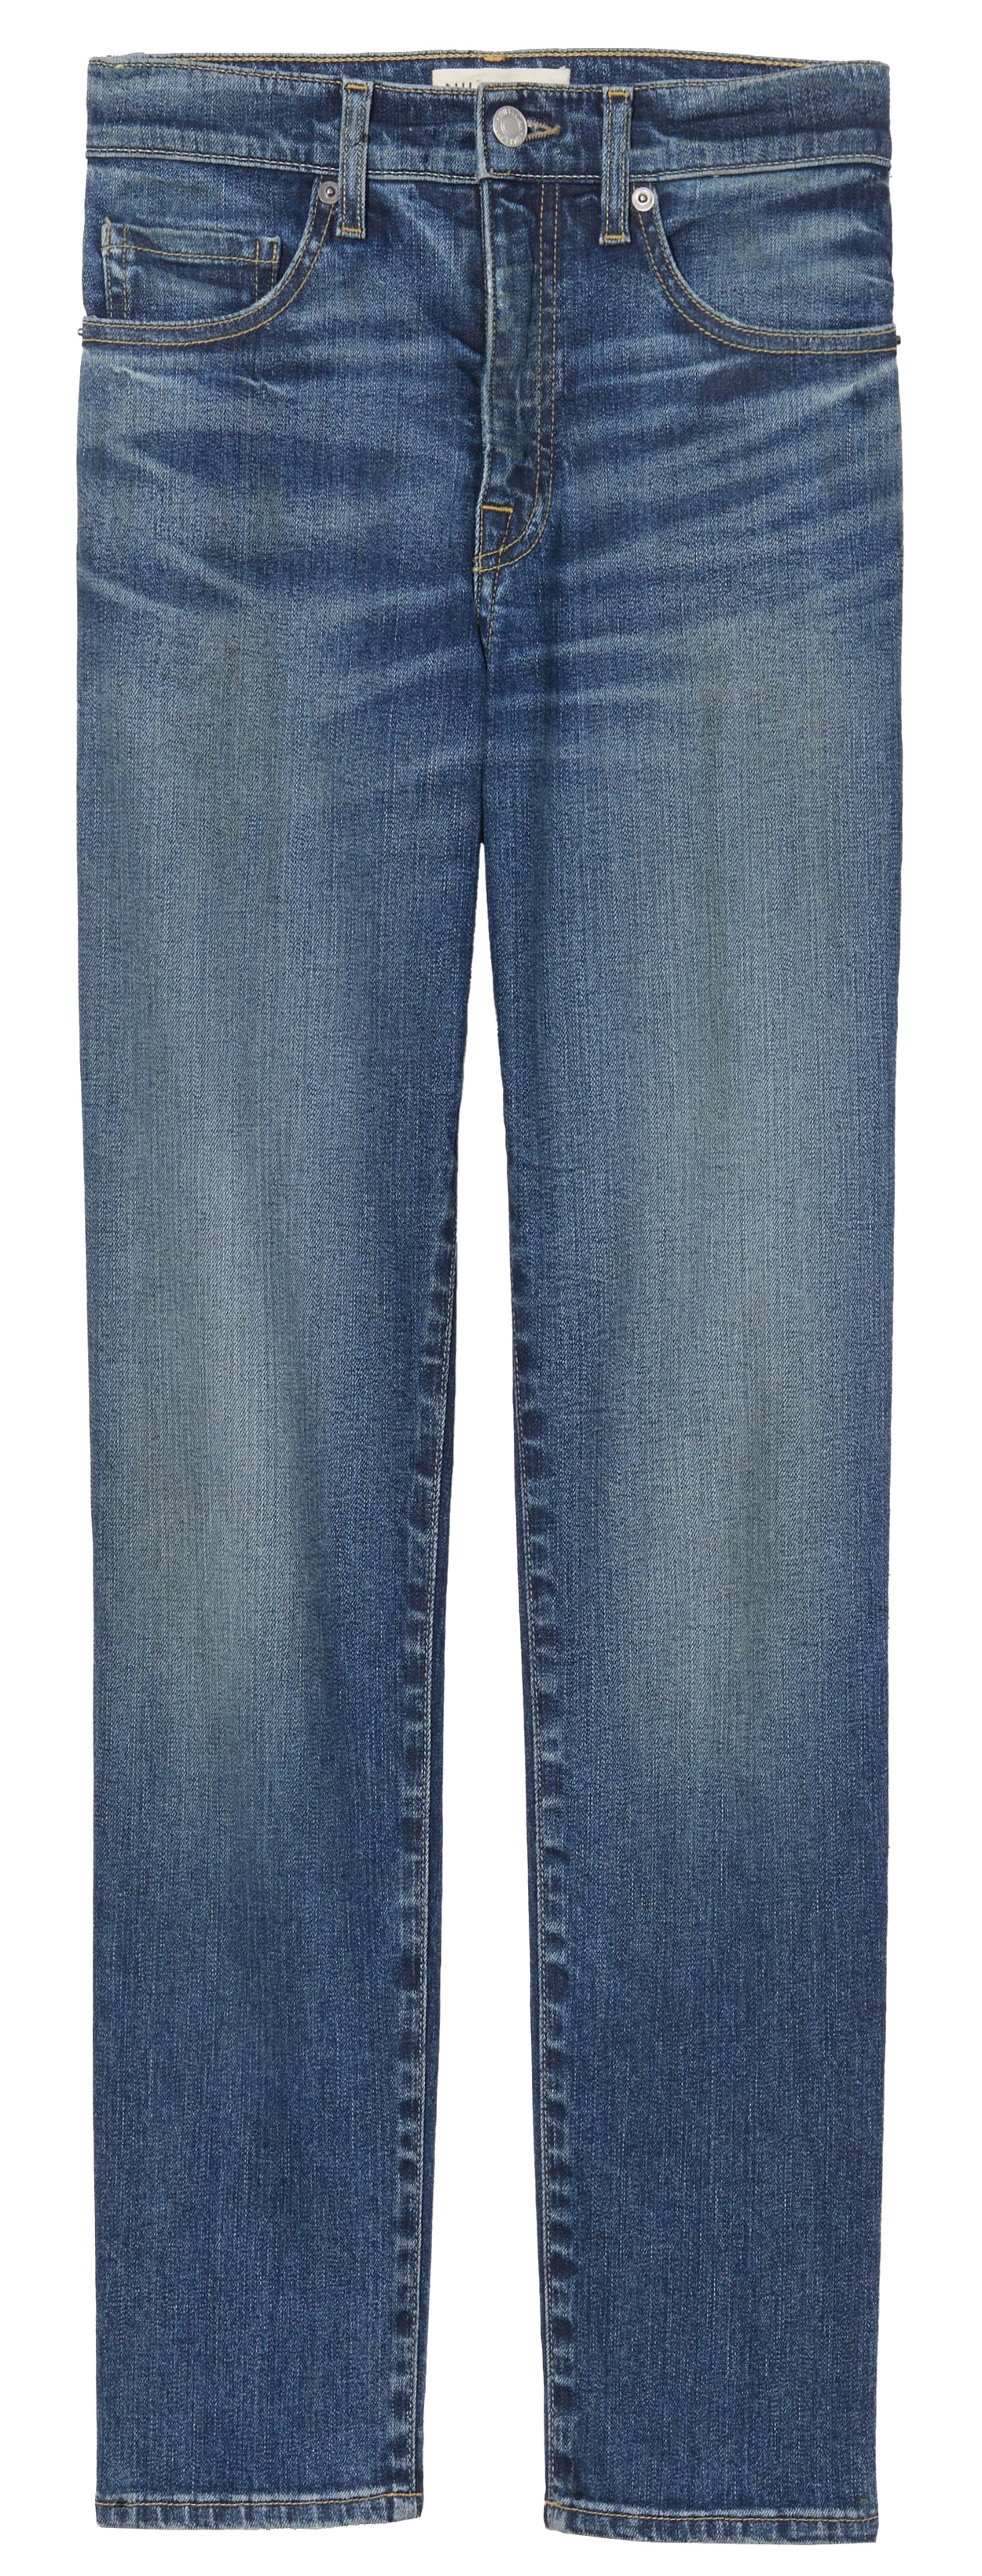 NILI LOTAN Jonas Skinny Jeans in Classic Wash